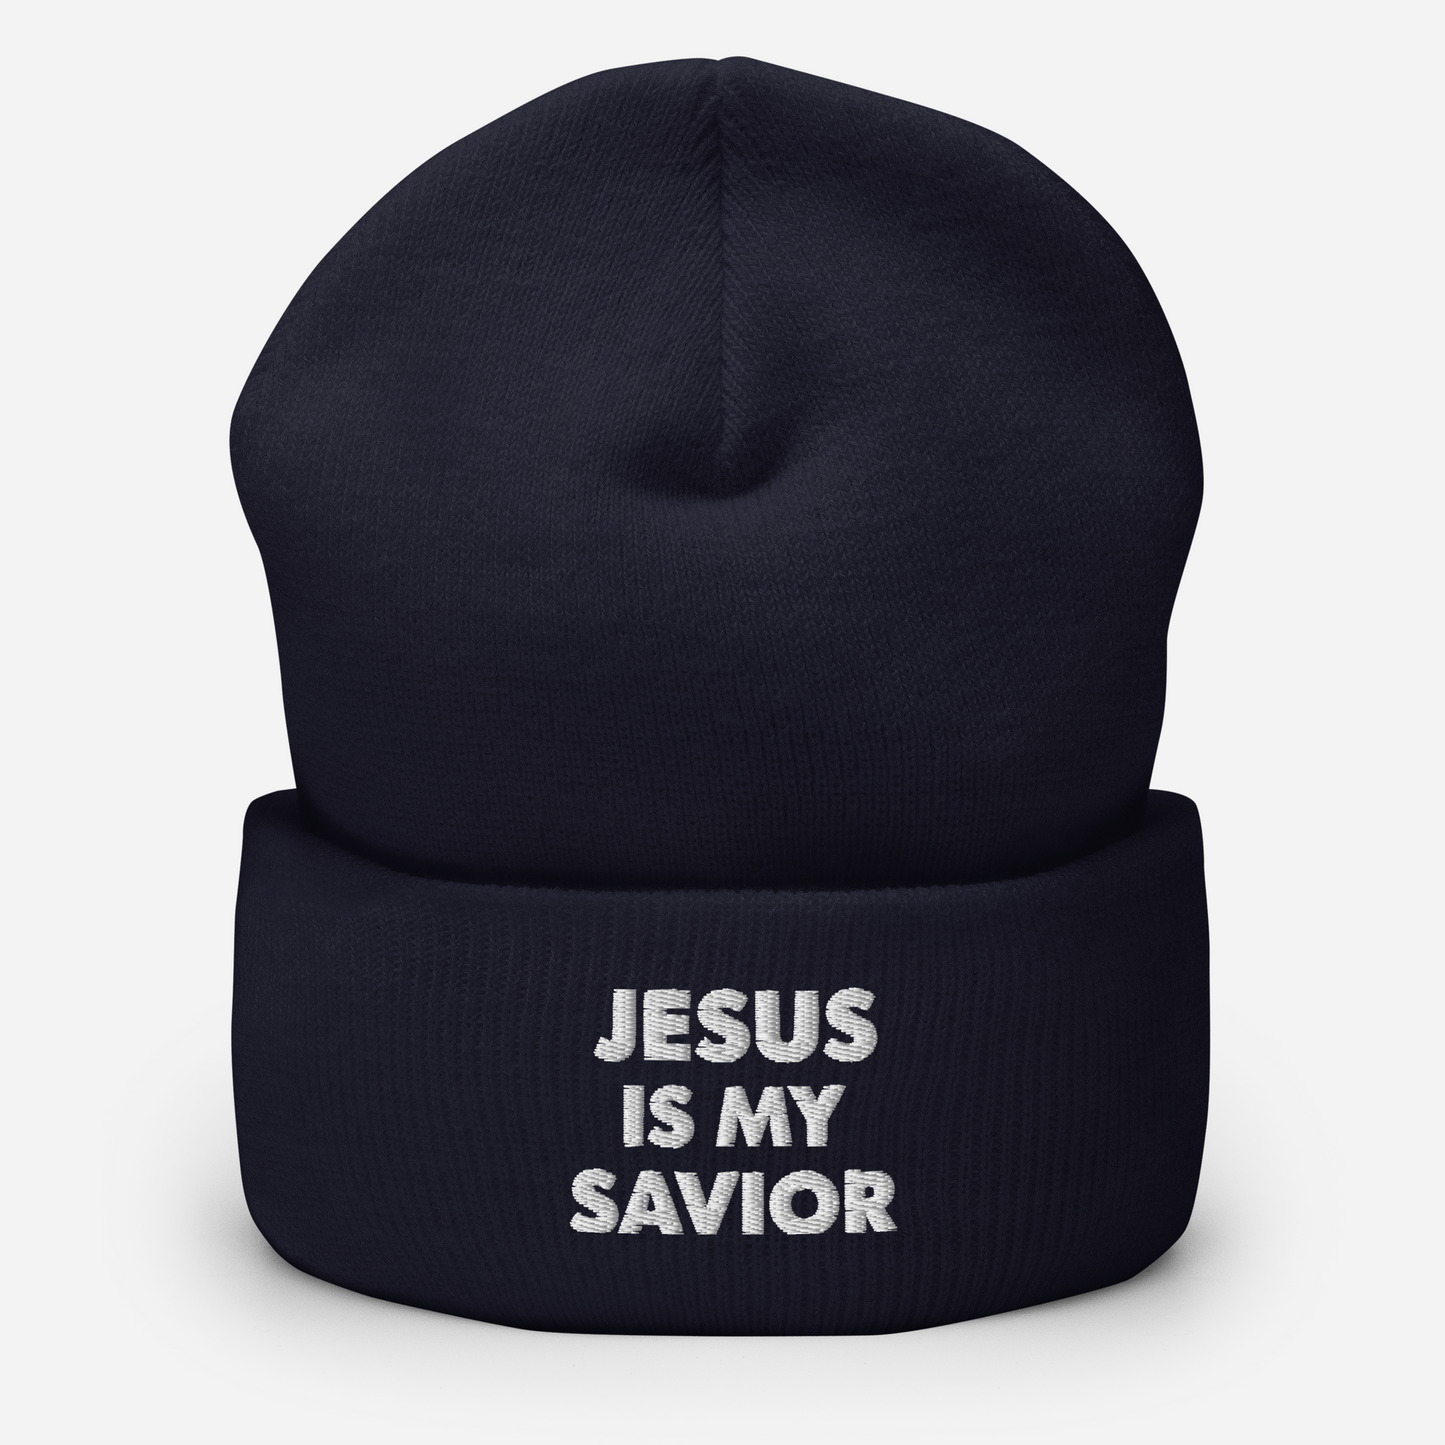 Jesus is my Savior - Cuffed Beanie